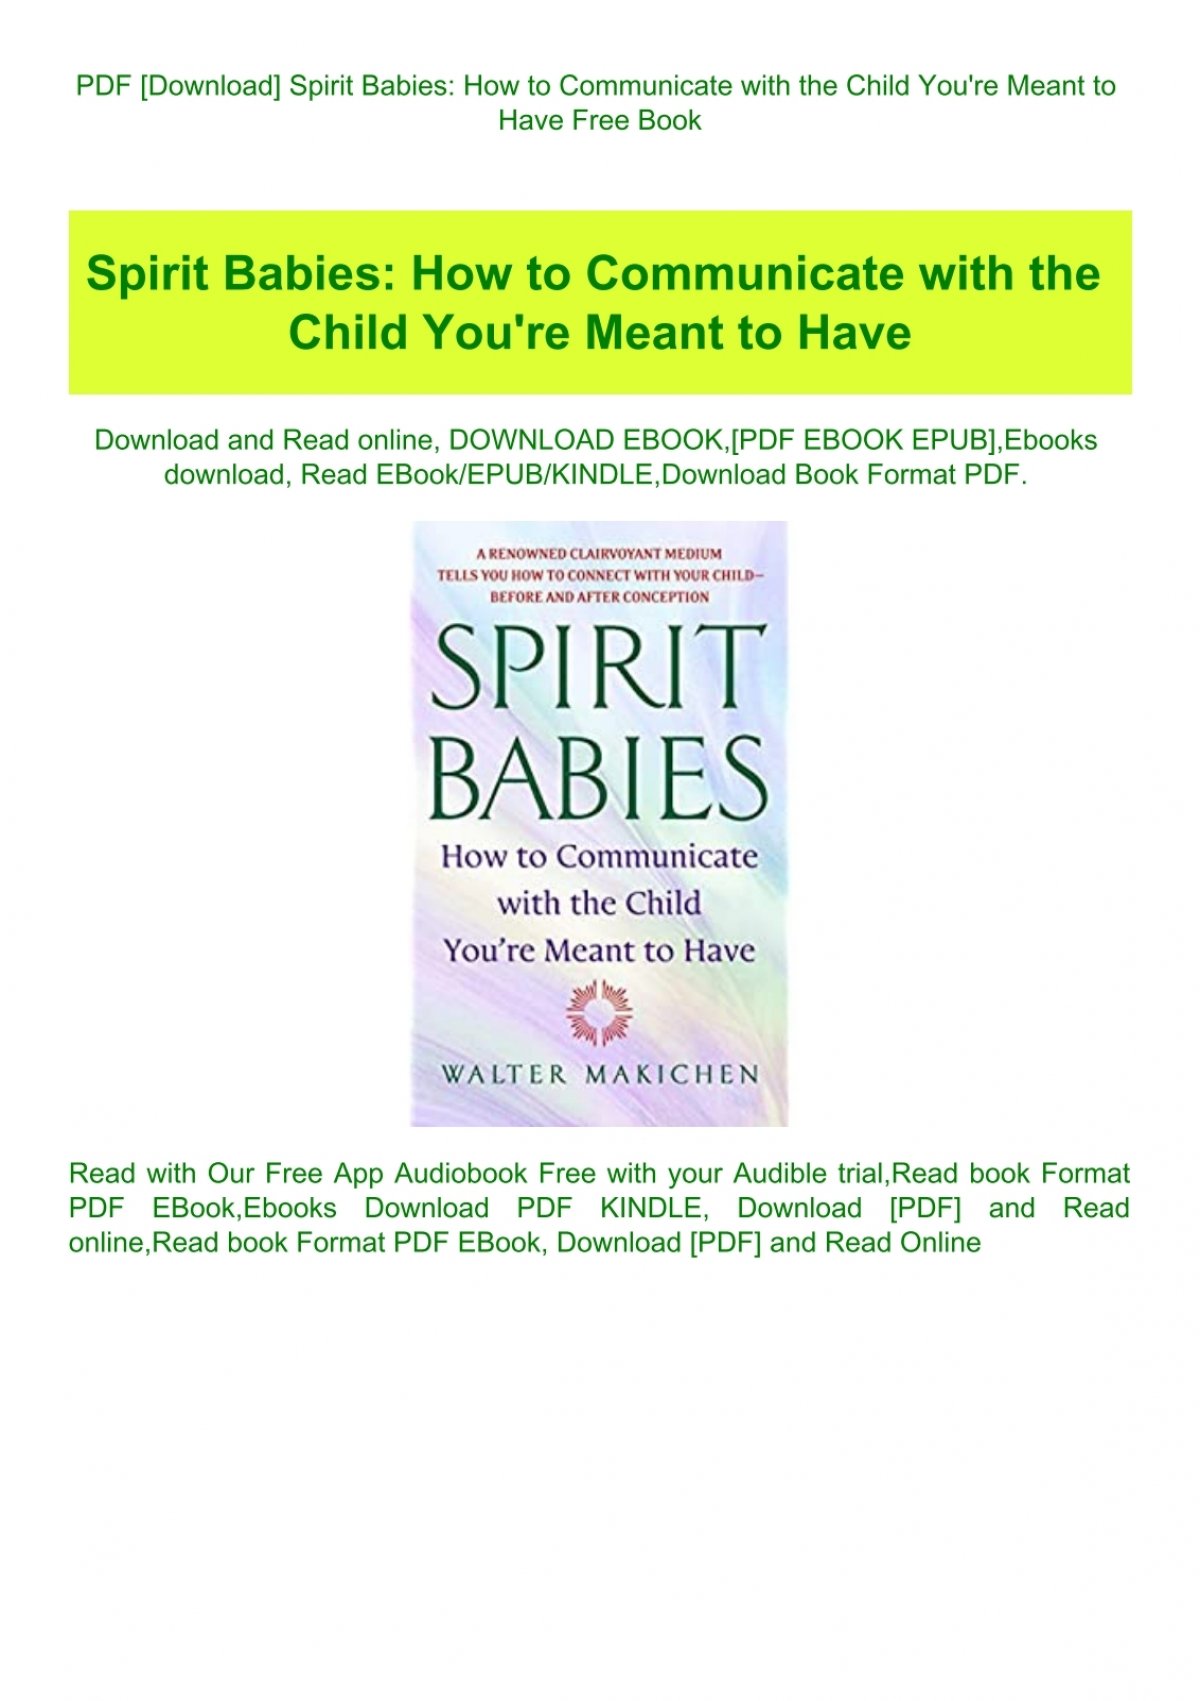 spirit babies book